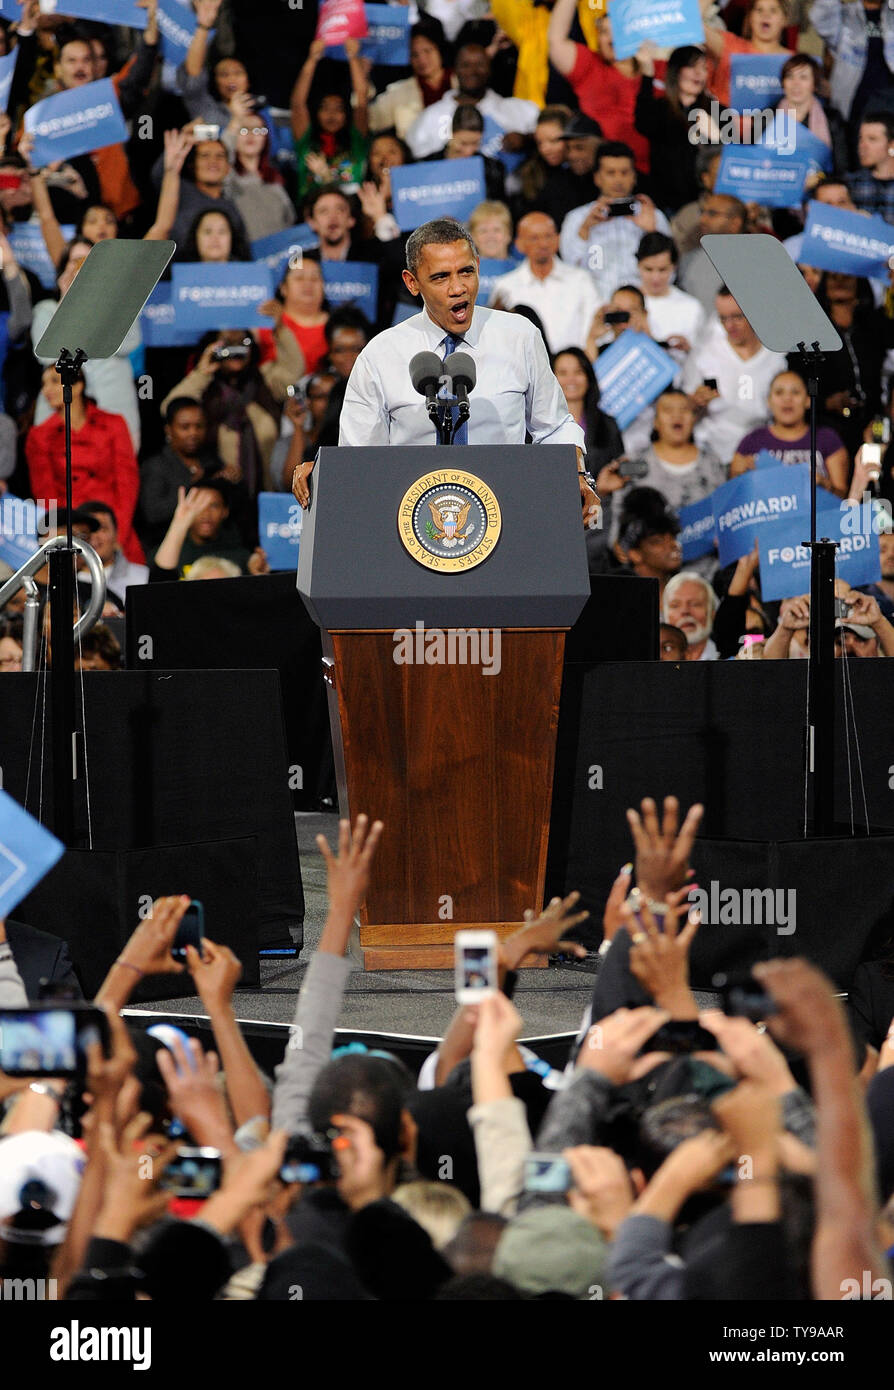 President Barack Obama speaks at a campaign event at Doolittle Park in Las Vegas, Nevada on October 24, 2012.  UPI/David Becker Stock Photo